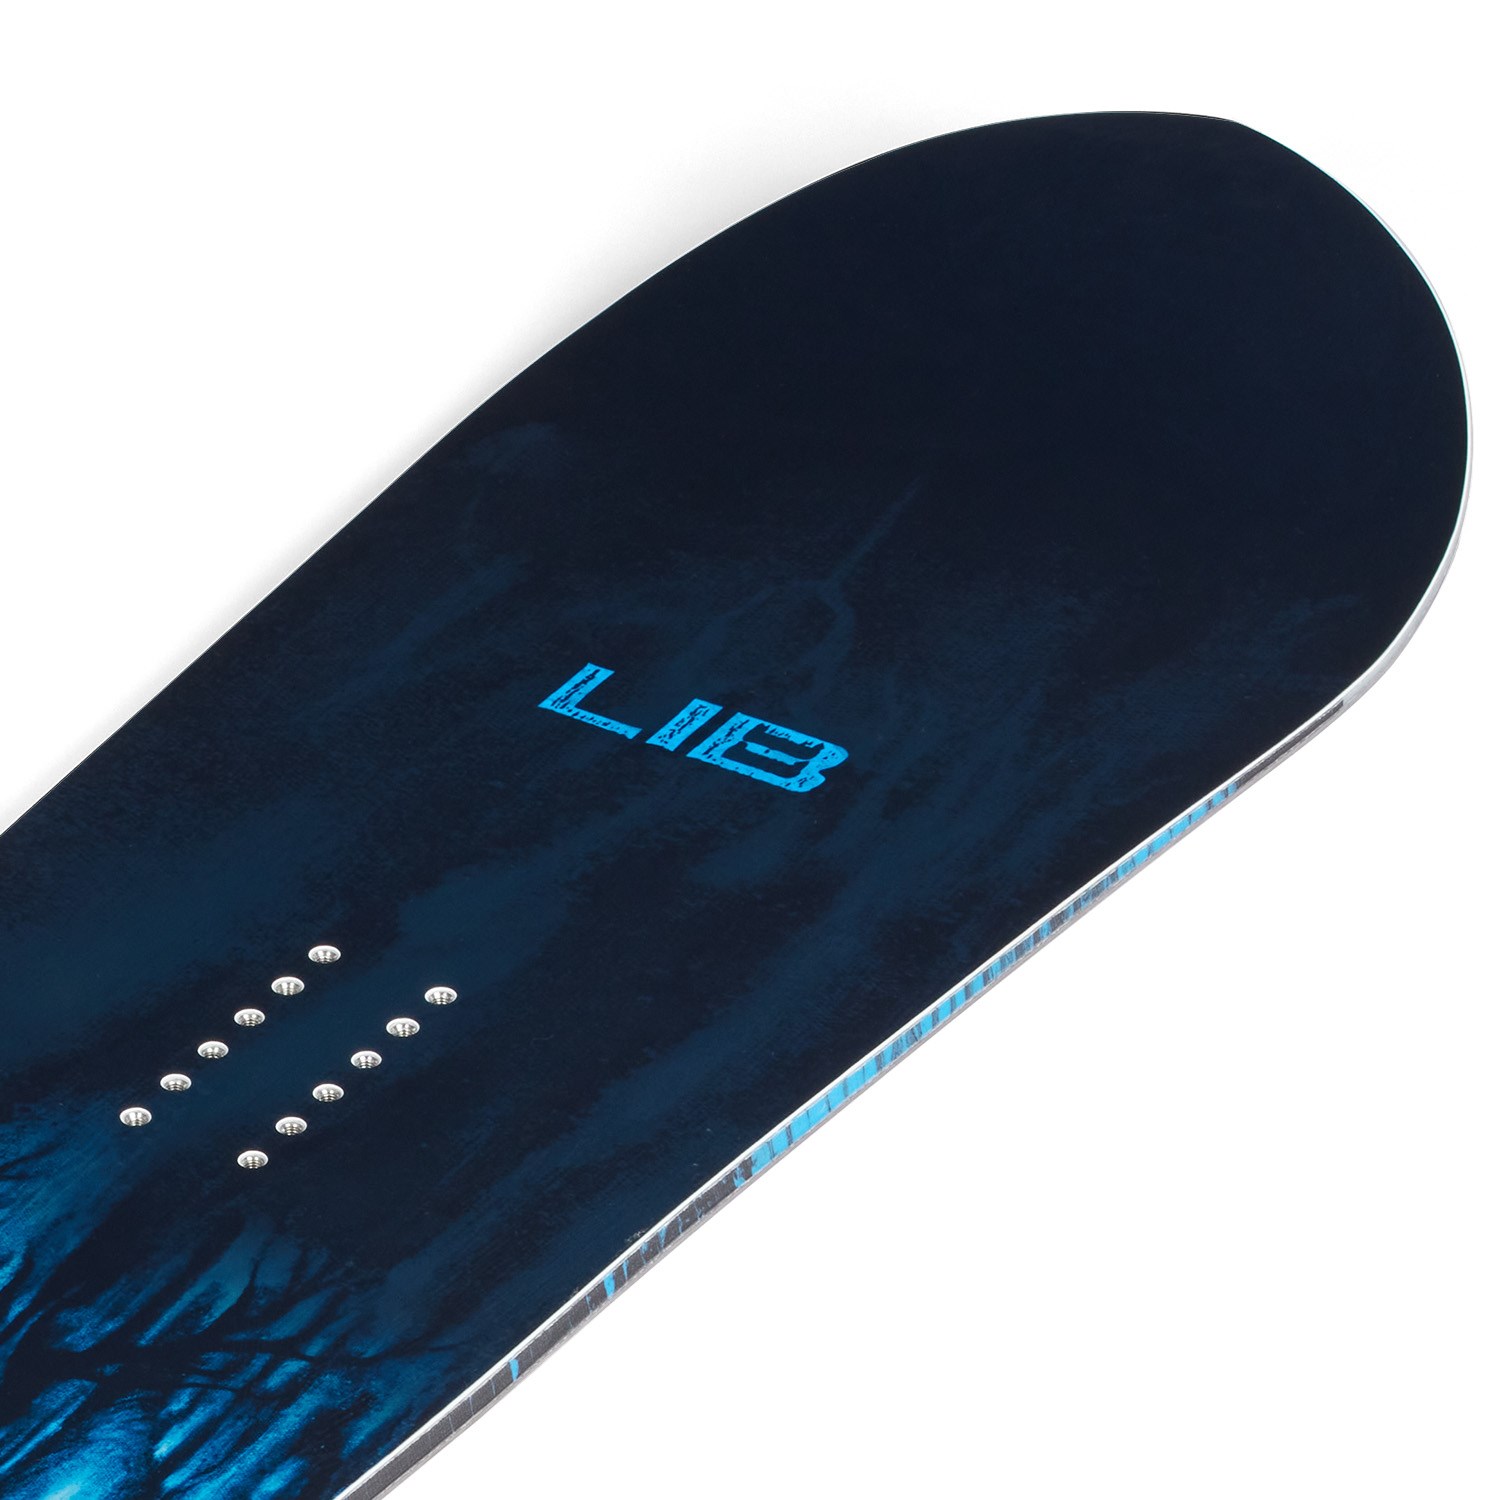 Lib Tech Skunk Ape II C2X Snowboard 2024